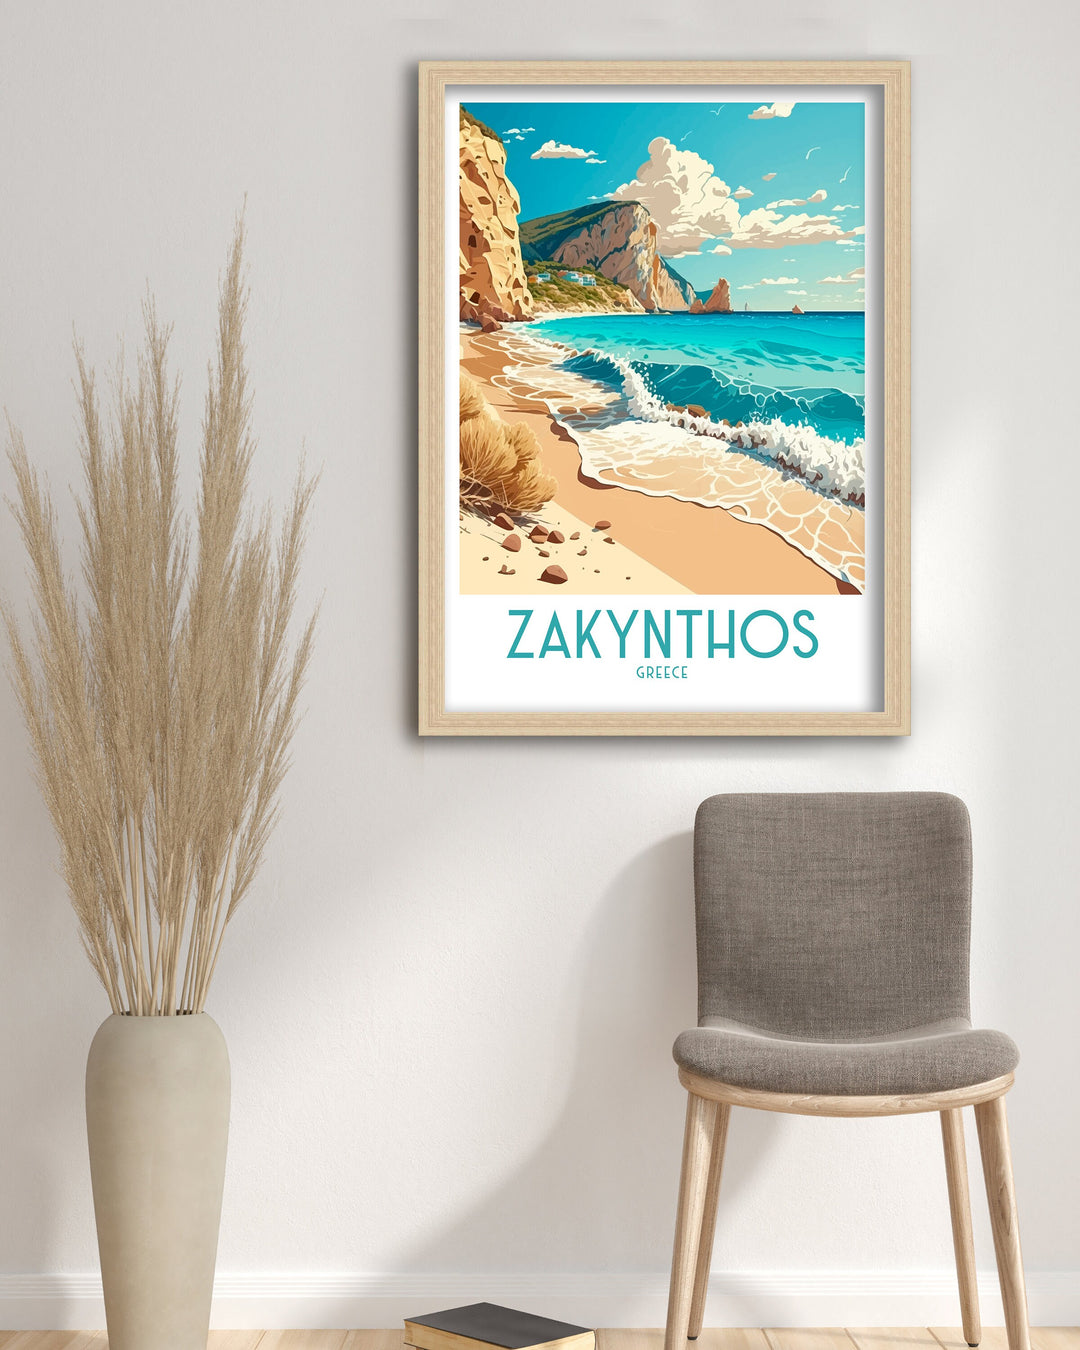 Zakynthos Greece Travel Poster Zakynthos Wall Art Zakynthos Home Decor Zakynthos Greece Illustration Travel Poster Gift for Zakynthos Greece